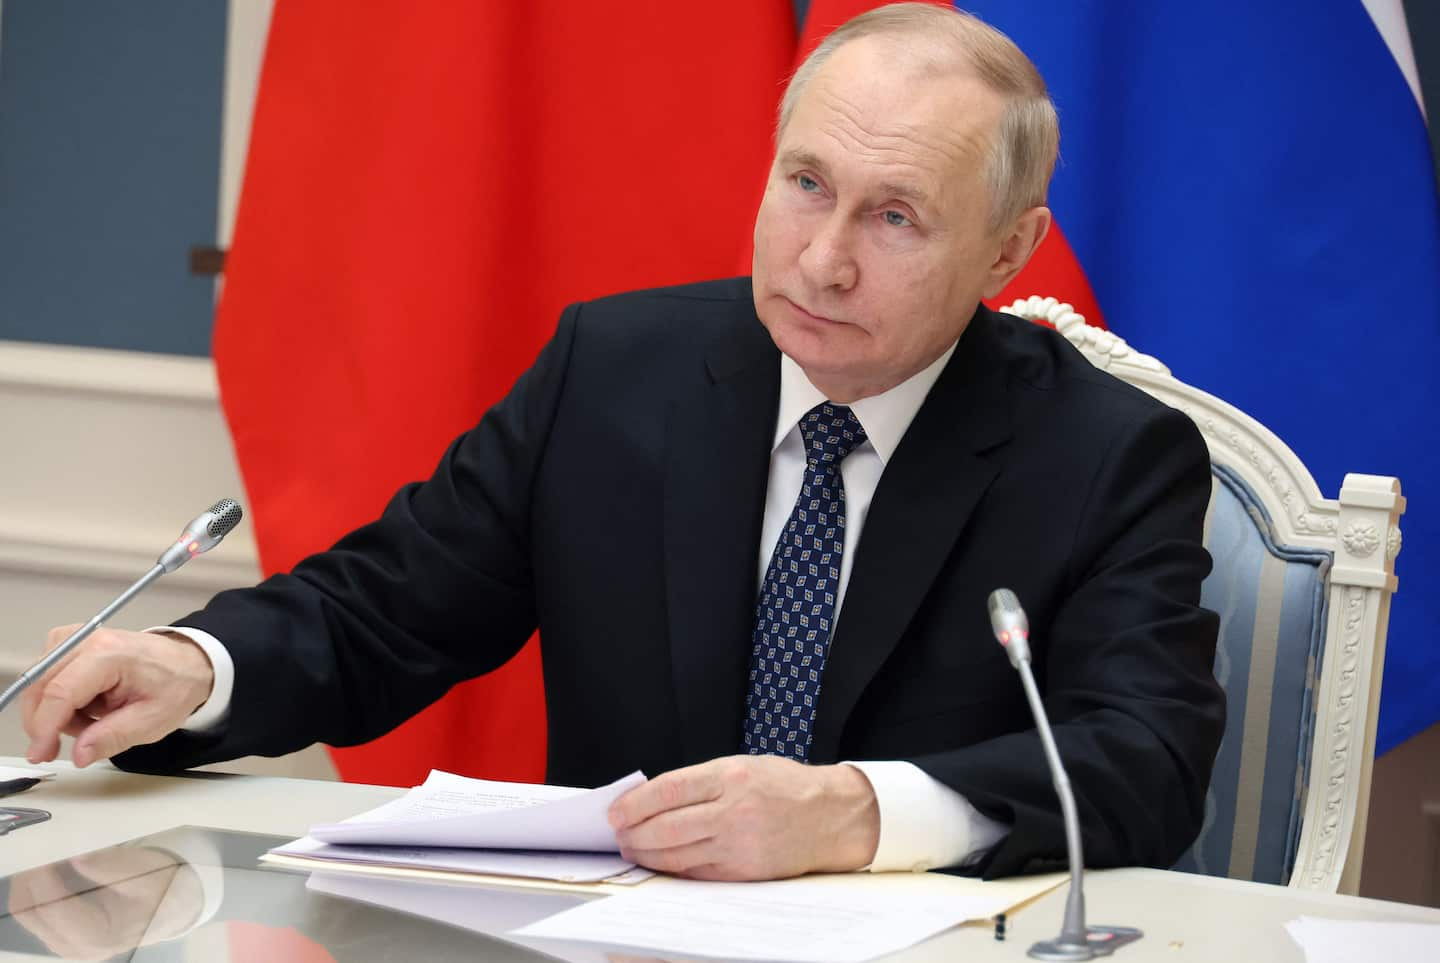 Putin orders the screening of documentaries on the Russian offensive in Ukraine